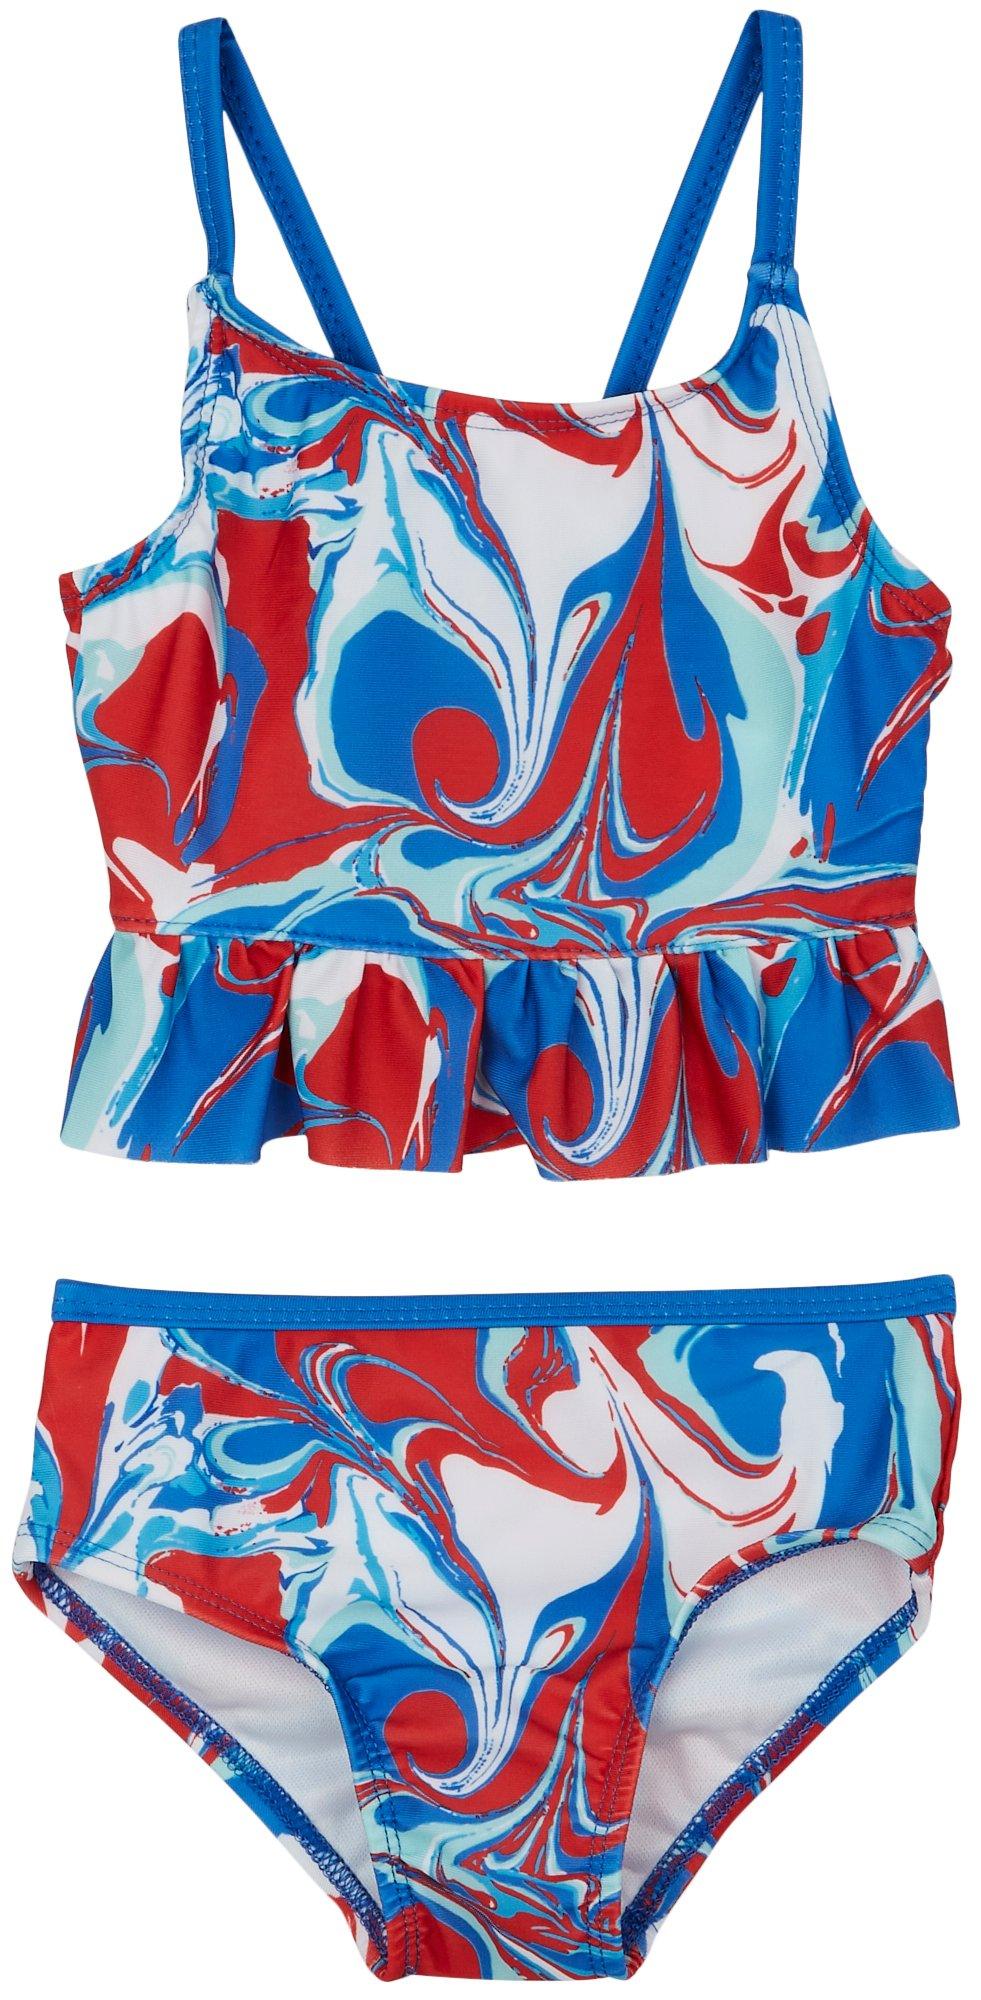 Big Girls 2-pc Swirl Swimsuit Set